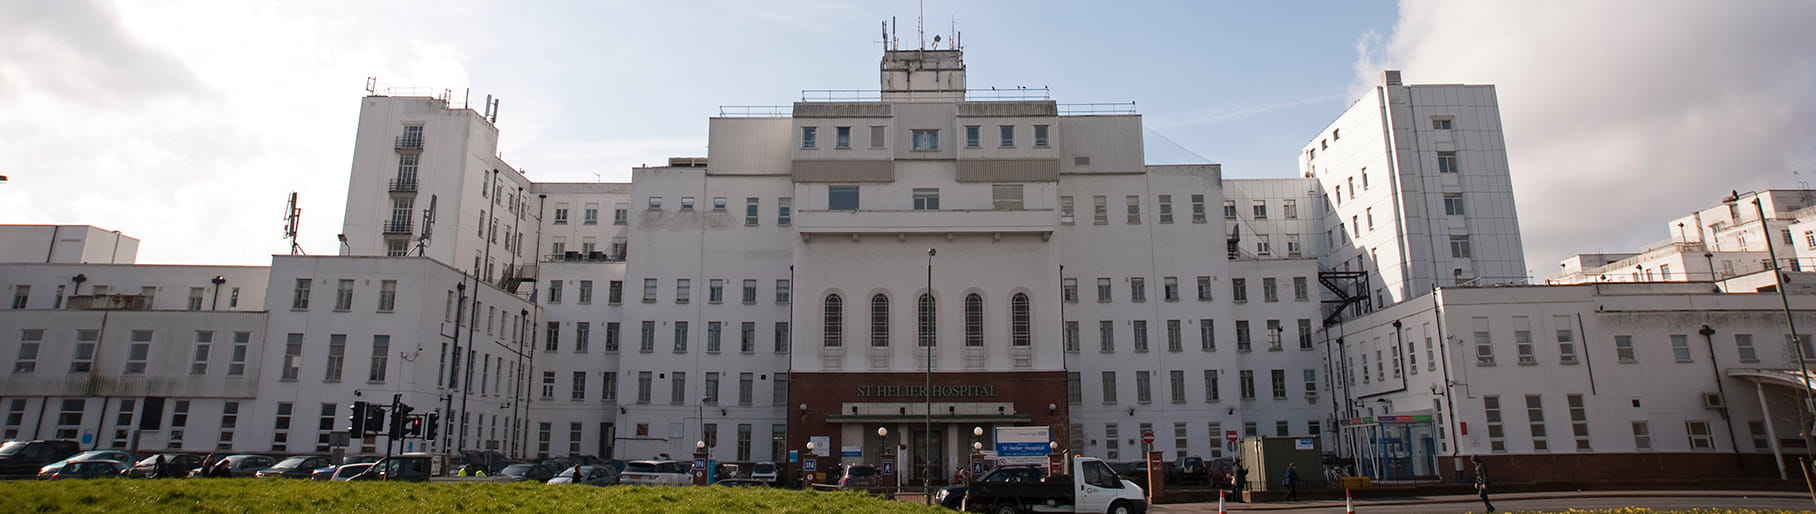 St. Helier Hospital, UK